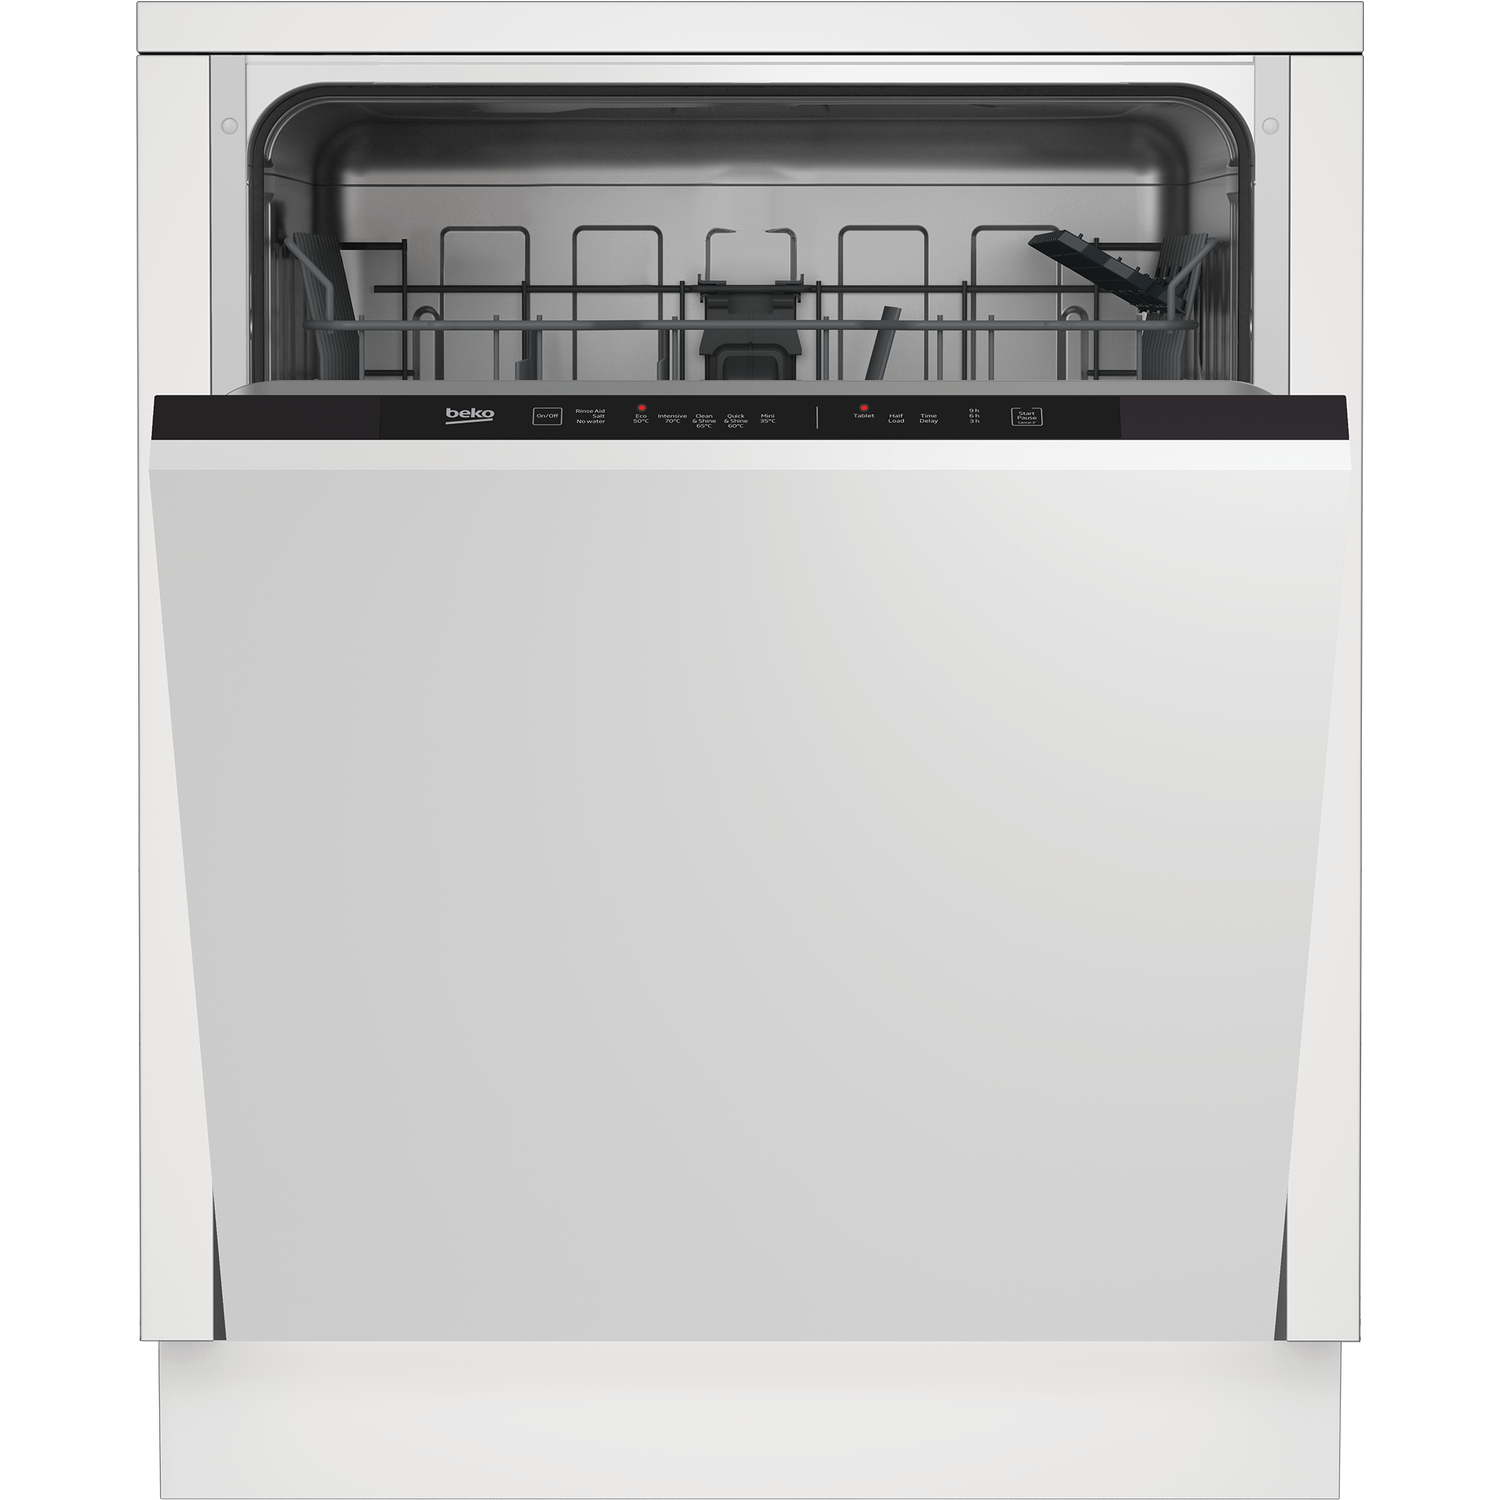 Beko 13 Place Settings Fully Integrated Dishwasher